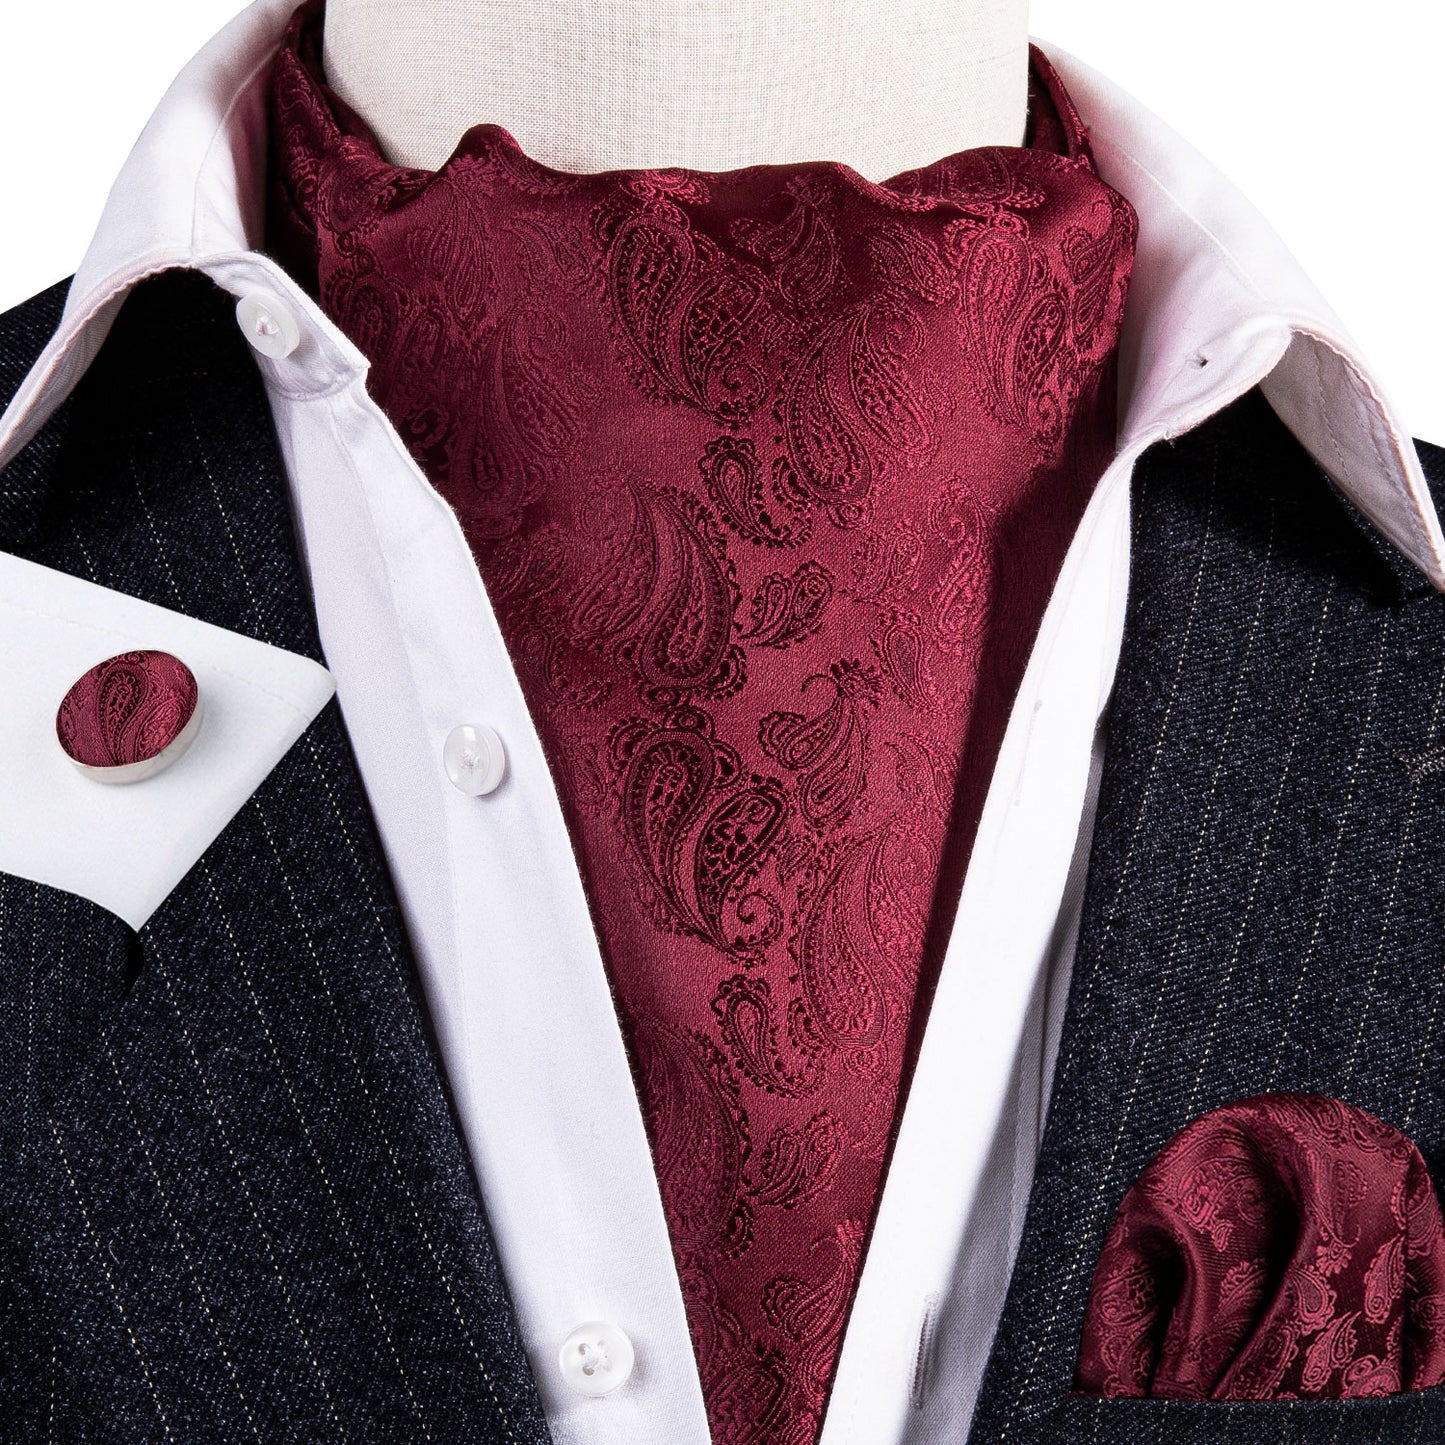 Victorian Ascot Silky Floral Day Cravat Set [Wine Paisley]